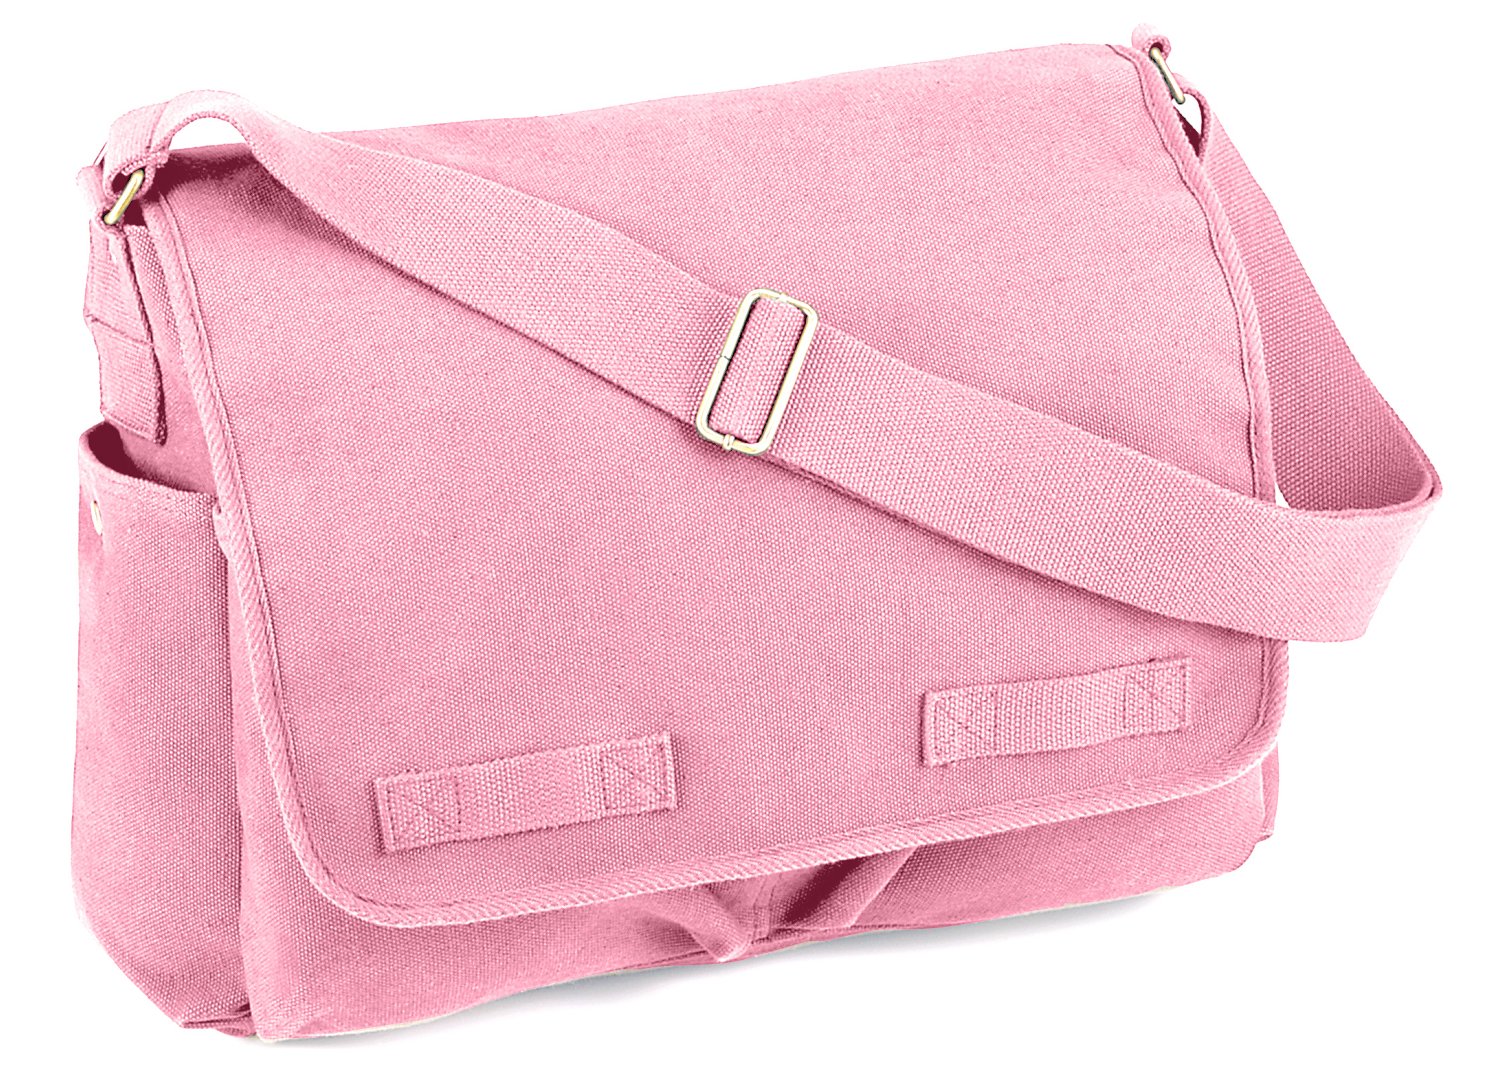 Rothco Classic Canvas Messenger Bag, Pink - image 1 of 3